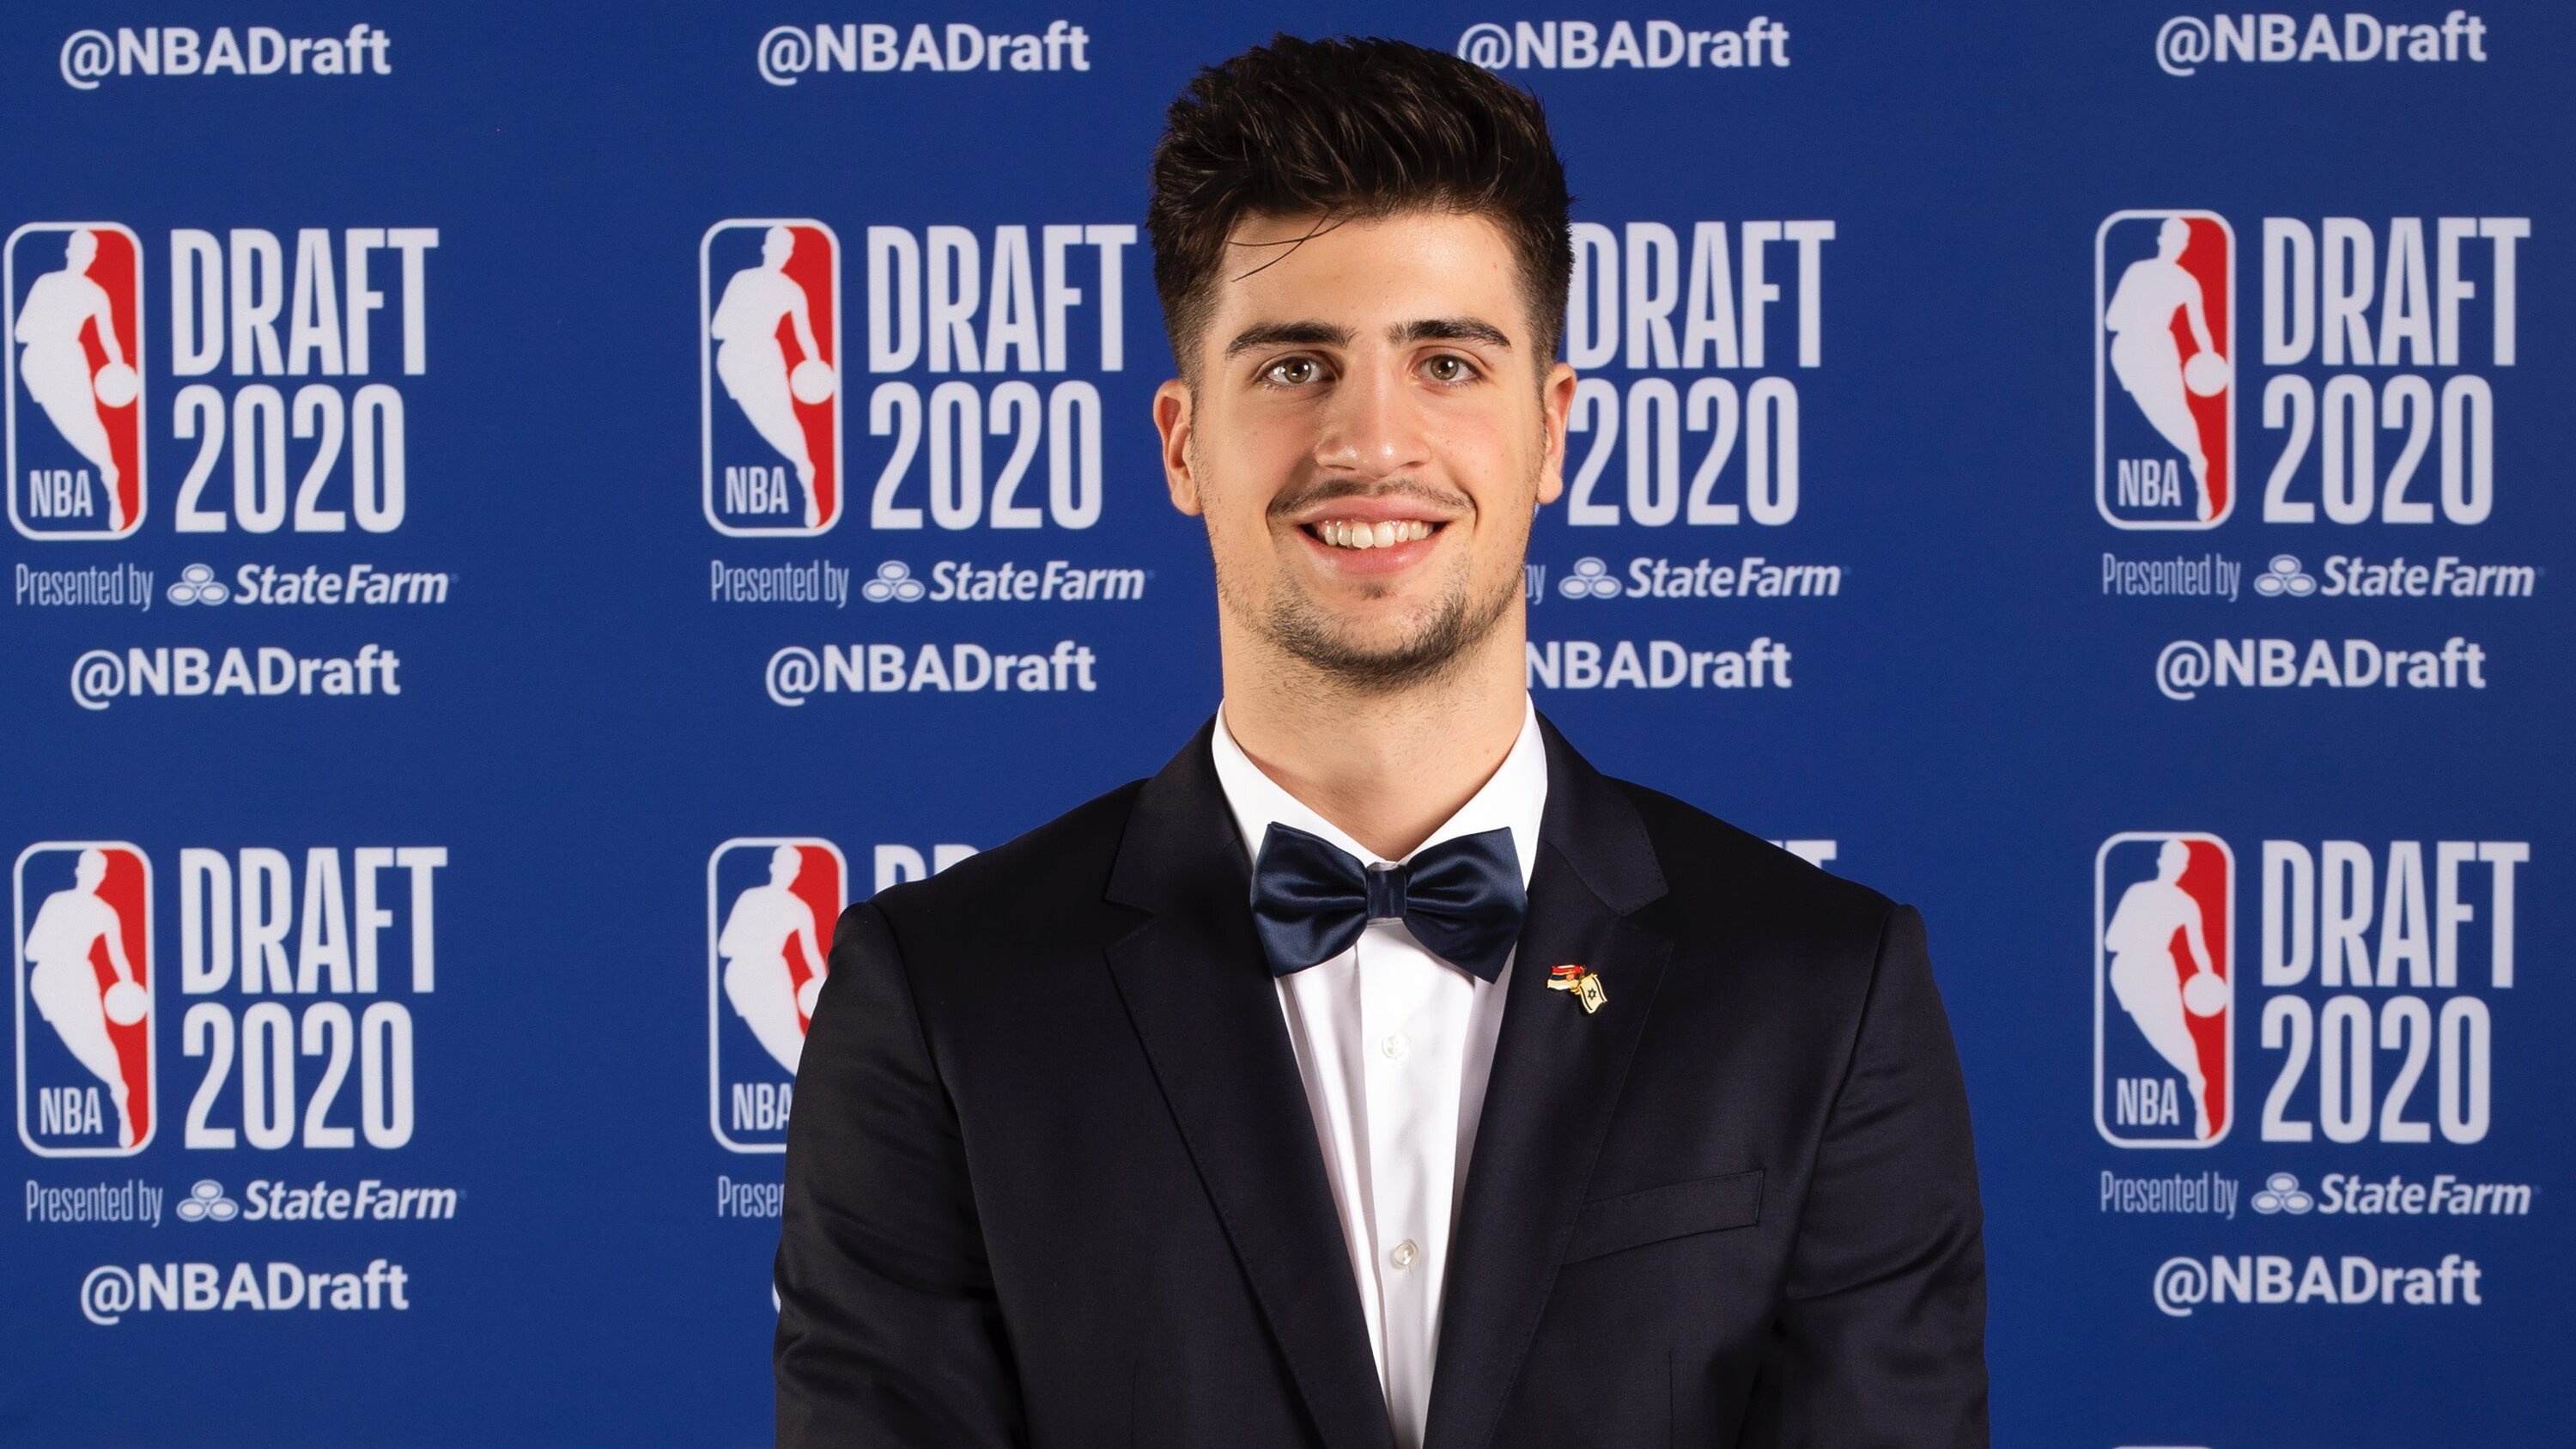 2020 NBA Draft: Wizards draft pick Deni Avdija says he learned